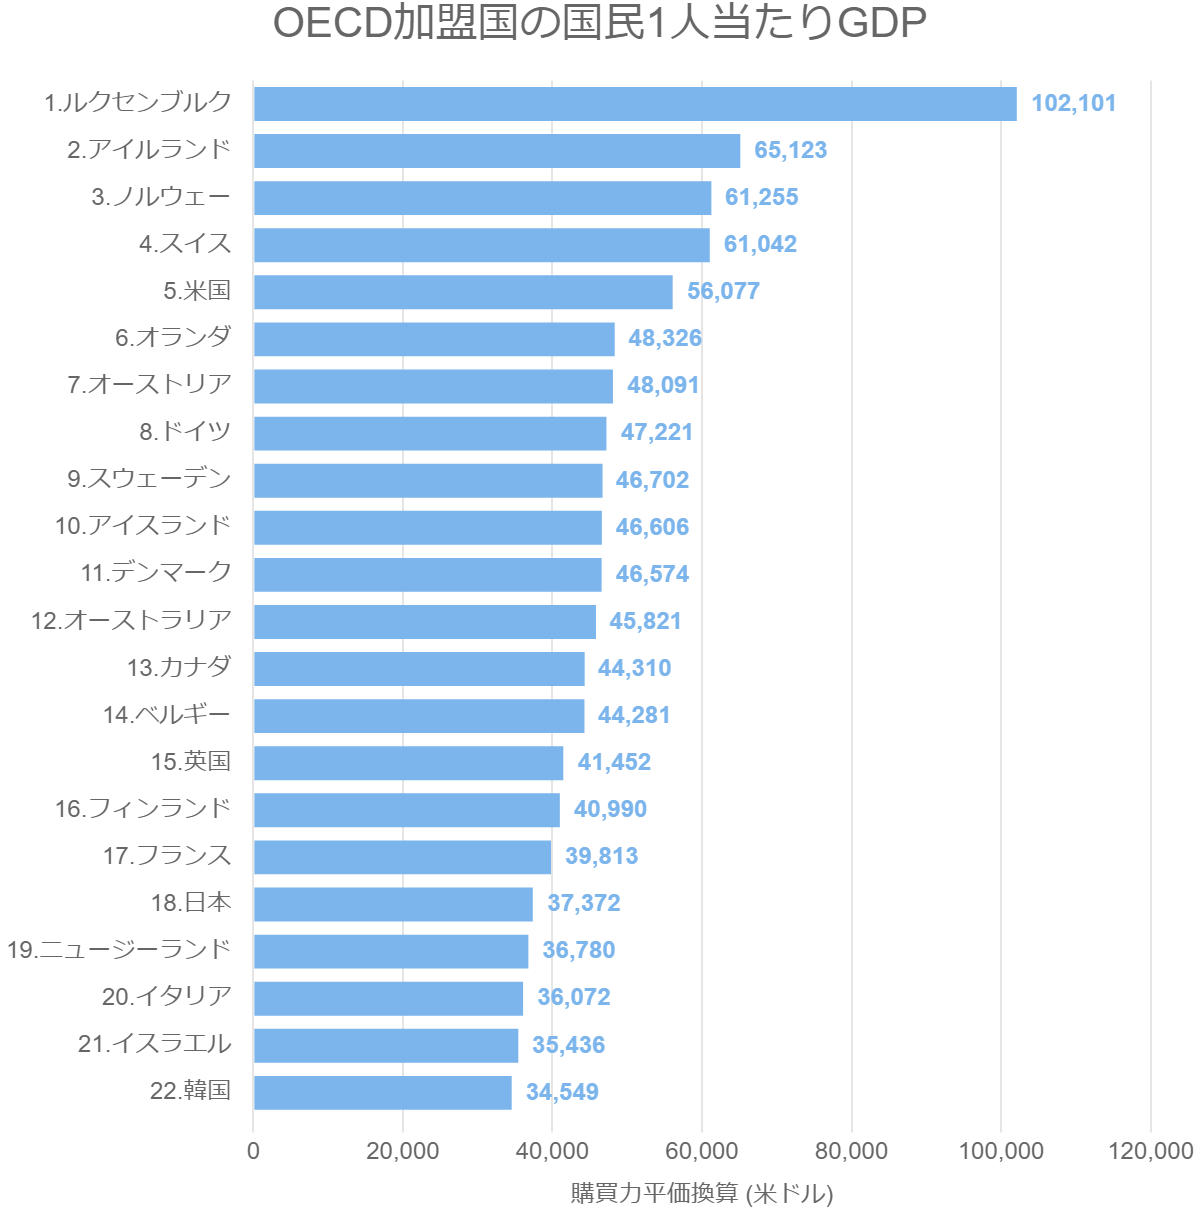 OECD加盟国の国民1人当たりGDP